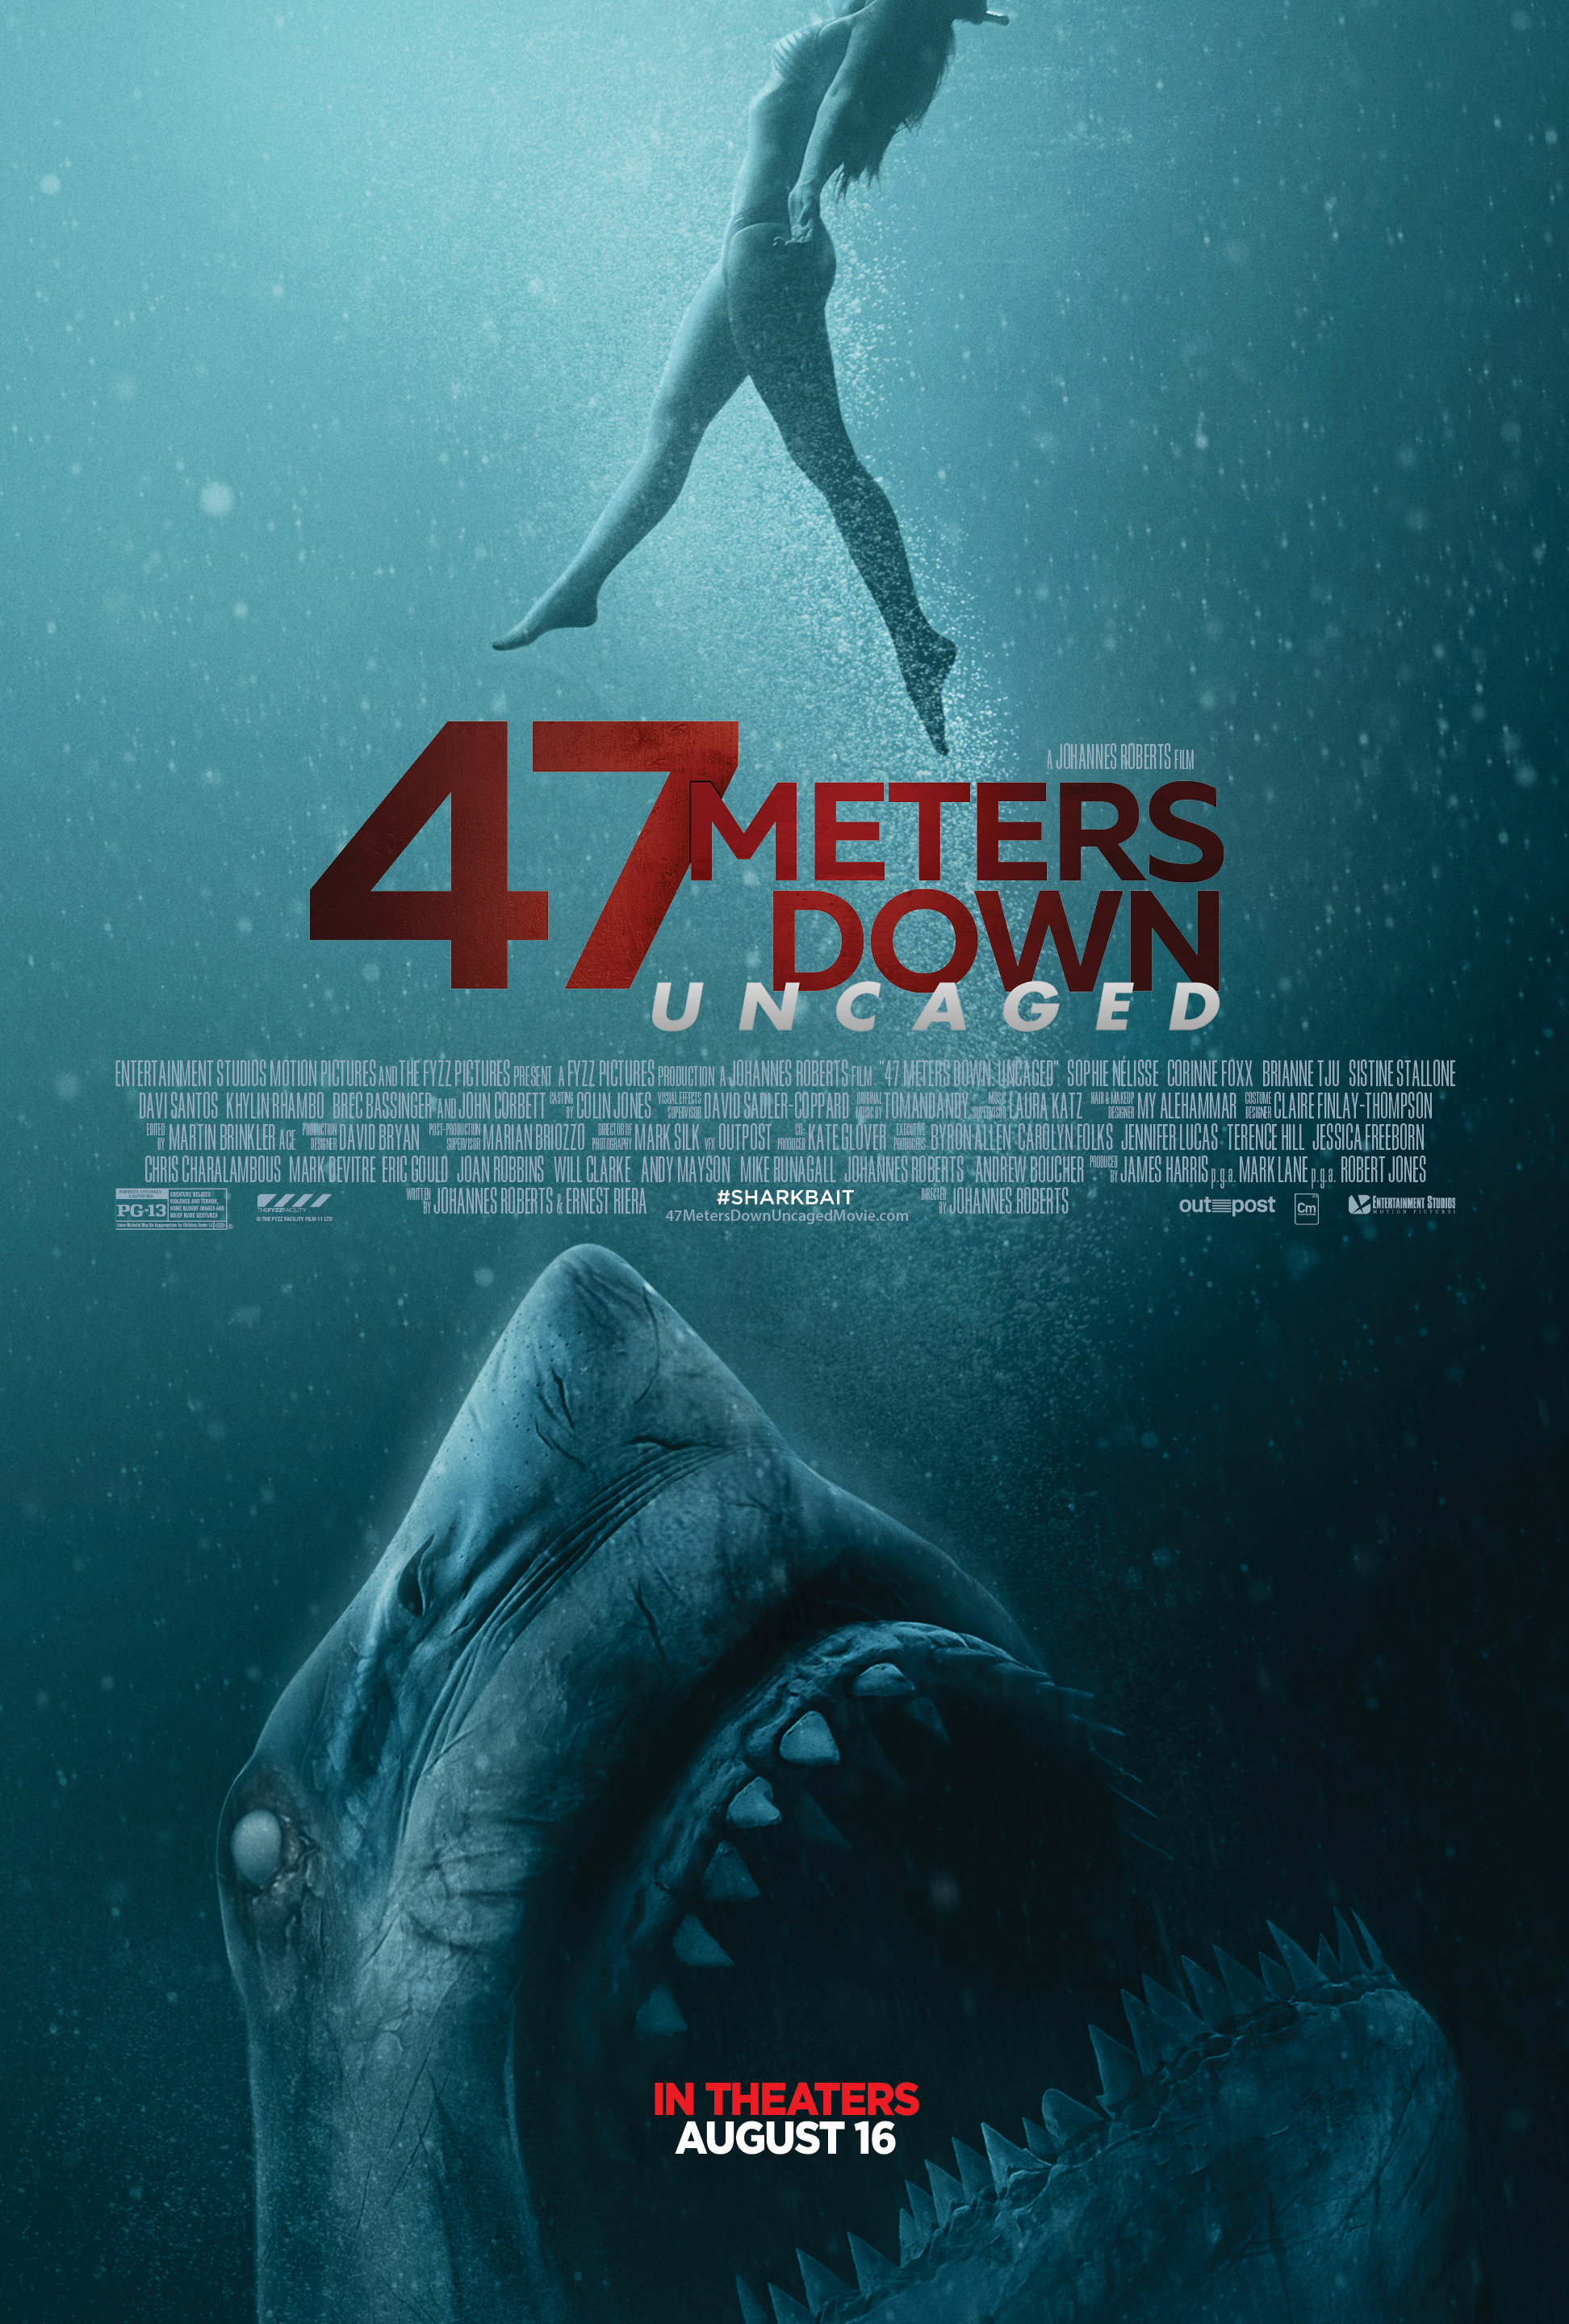 Stiahni si Filmy s titulkama 47 metru: Mimo klec / 47 Meters Down: Uncaged (2019)[WebRip][1080p] = CSFD 45%